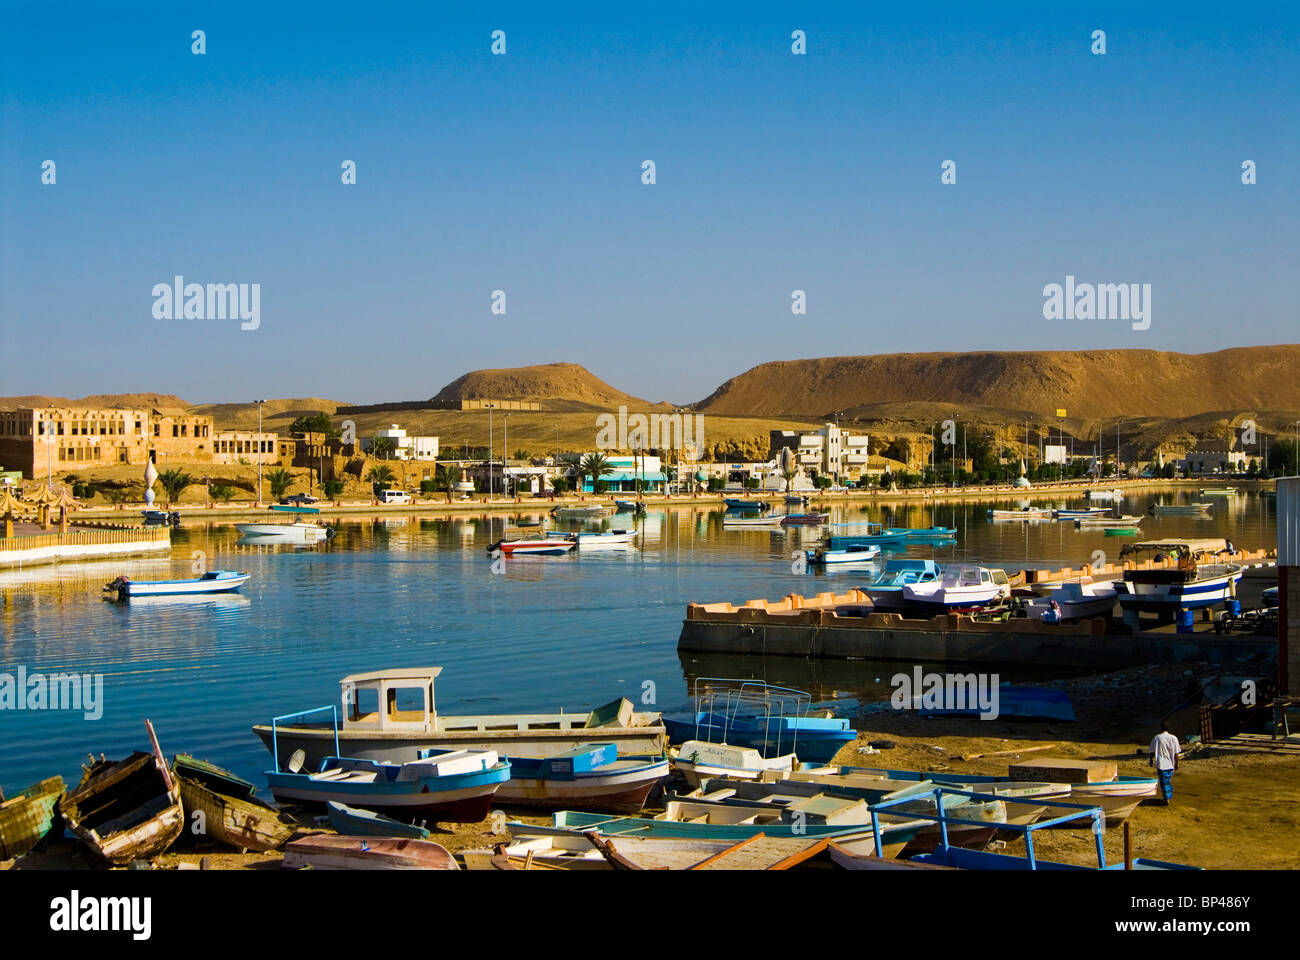 Saudi Arabia, Duba, port of the town on the Red Sea shore Stock Photo -  Alamy